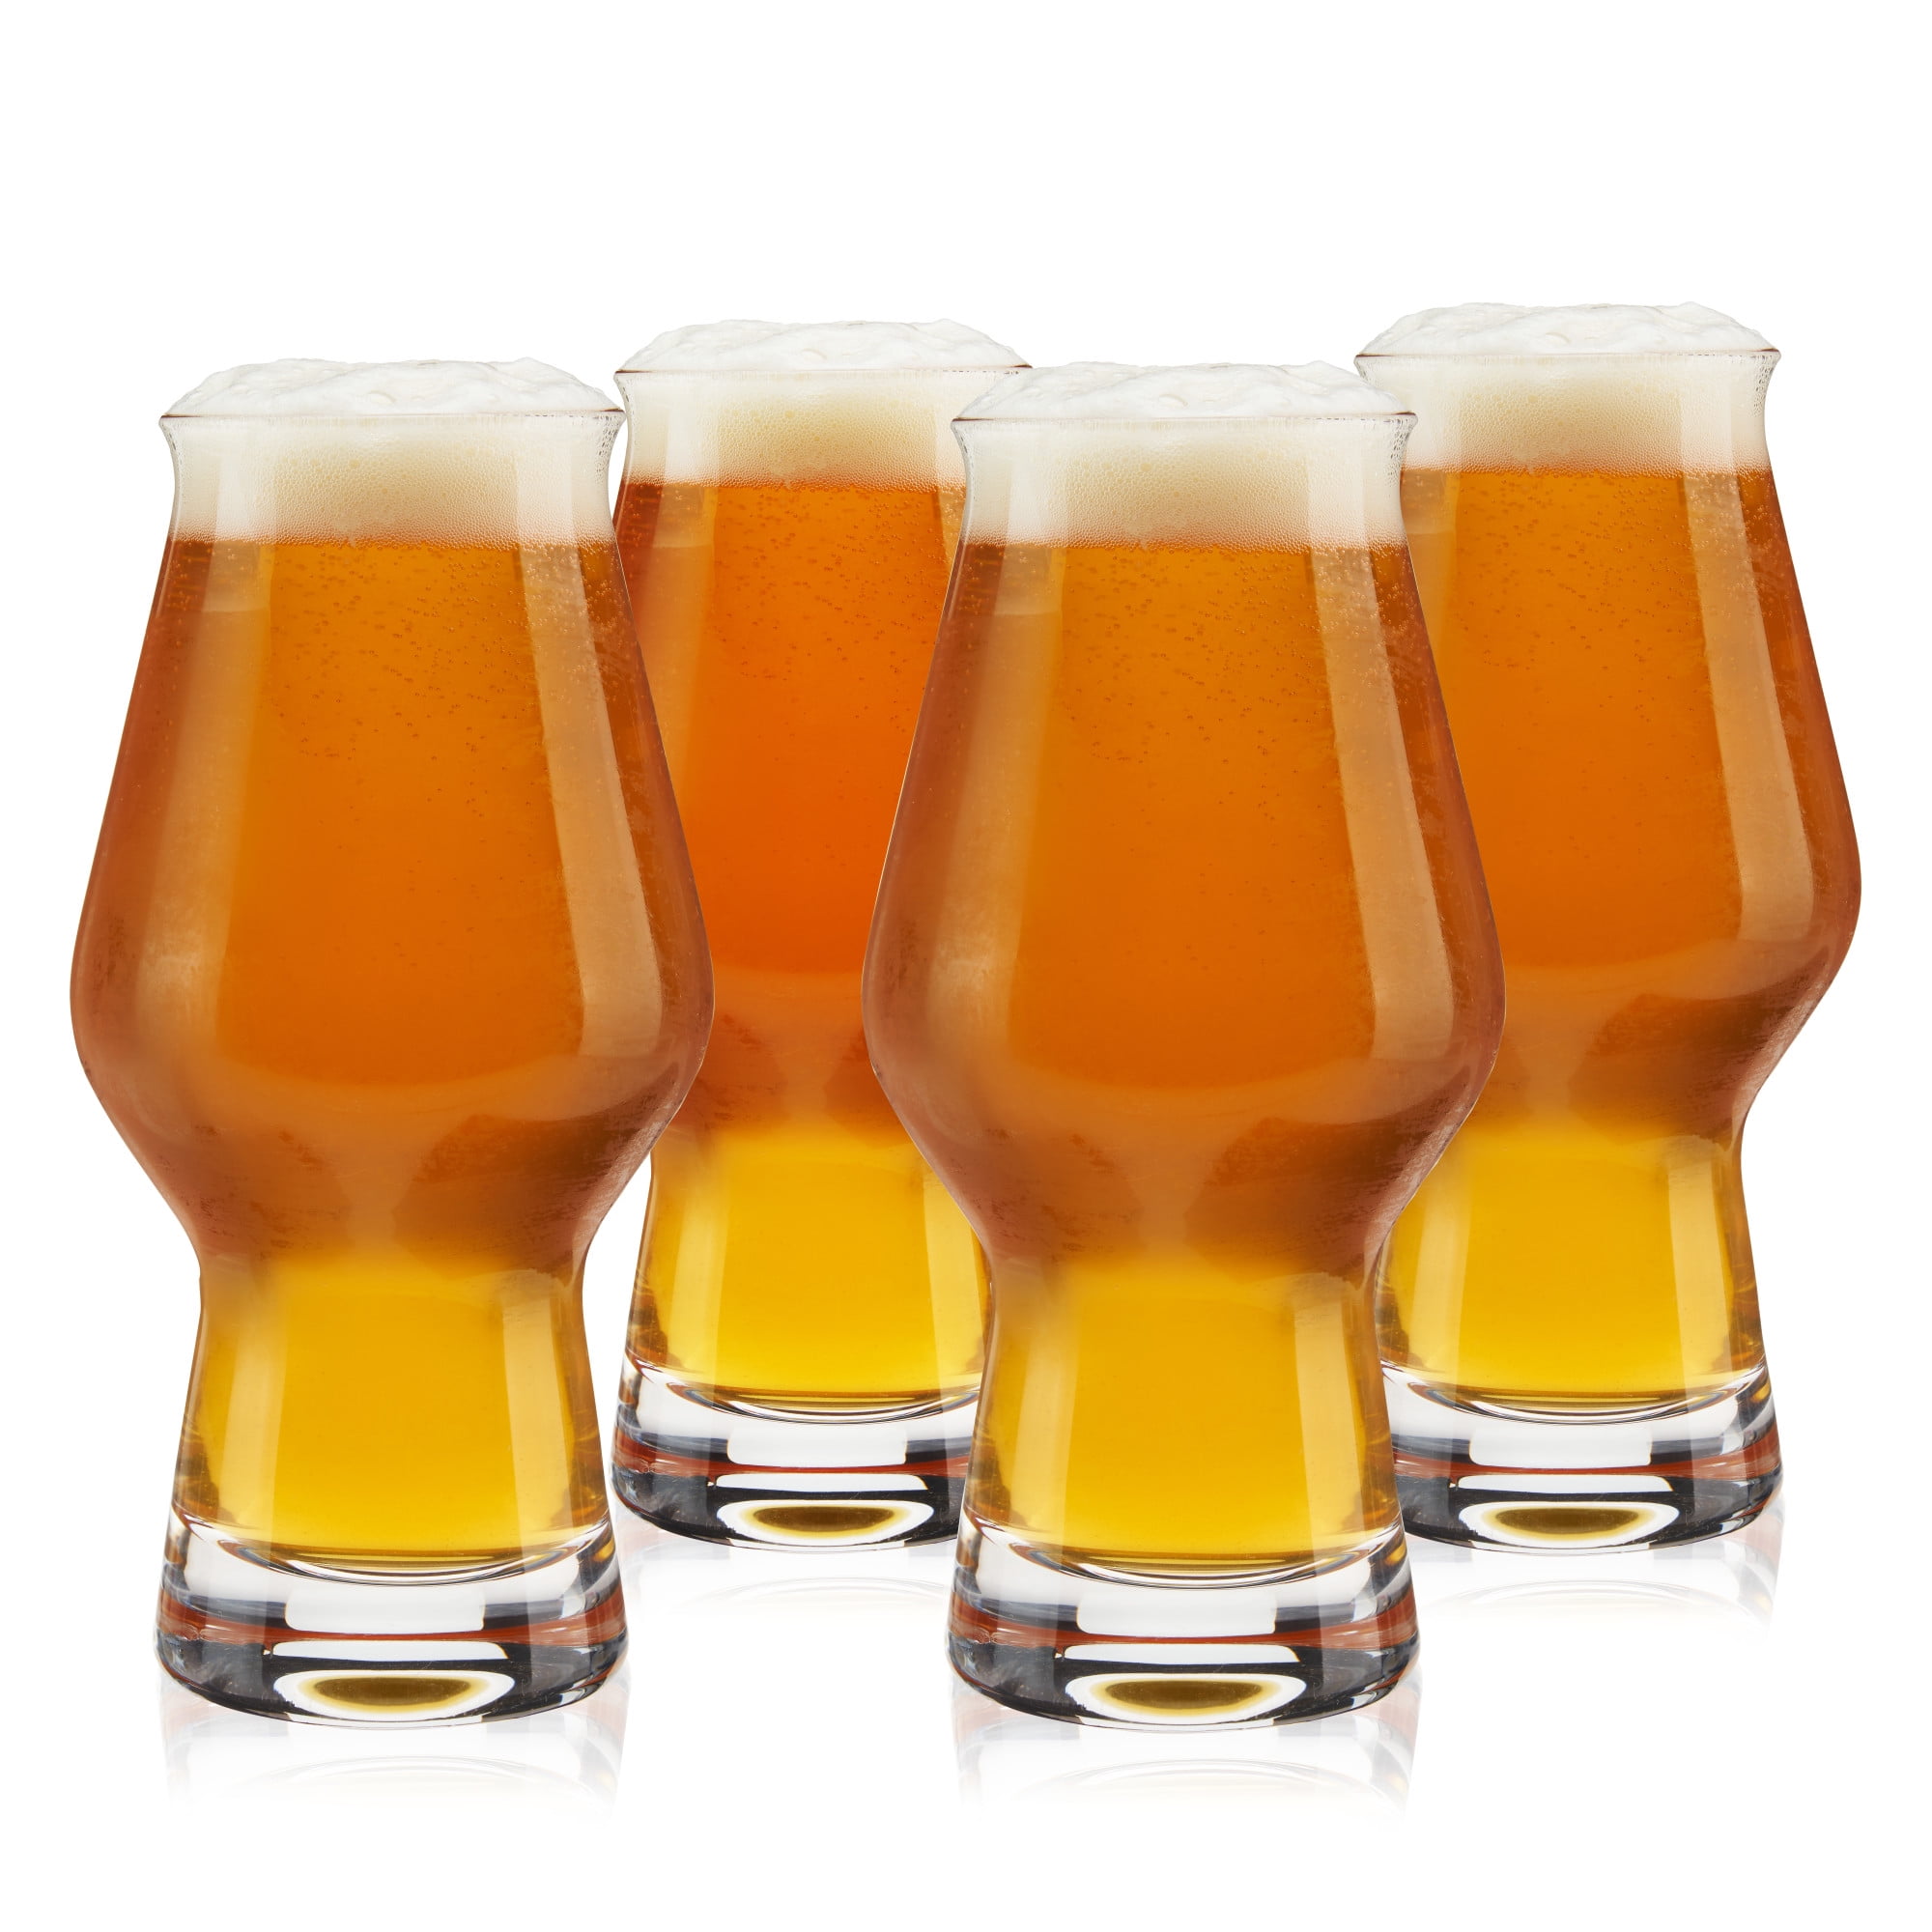 Realtree Pilsner Beer Glasses - Set of 4